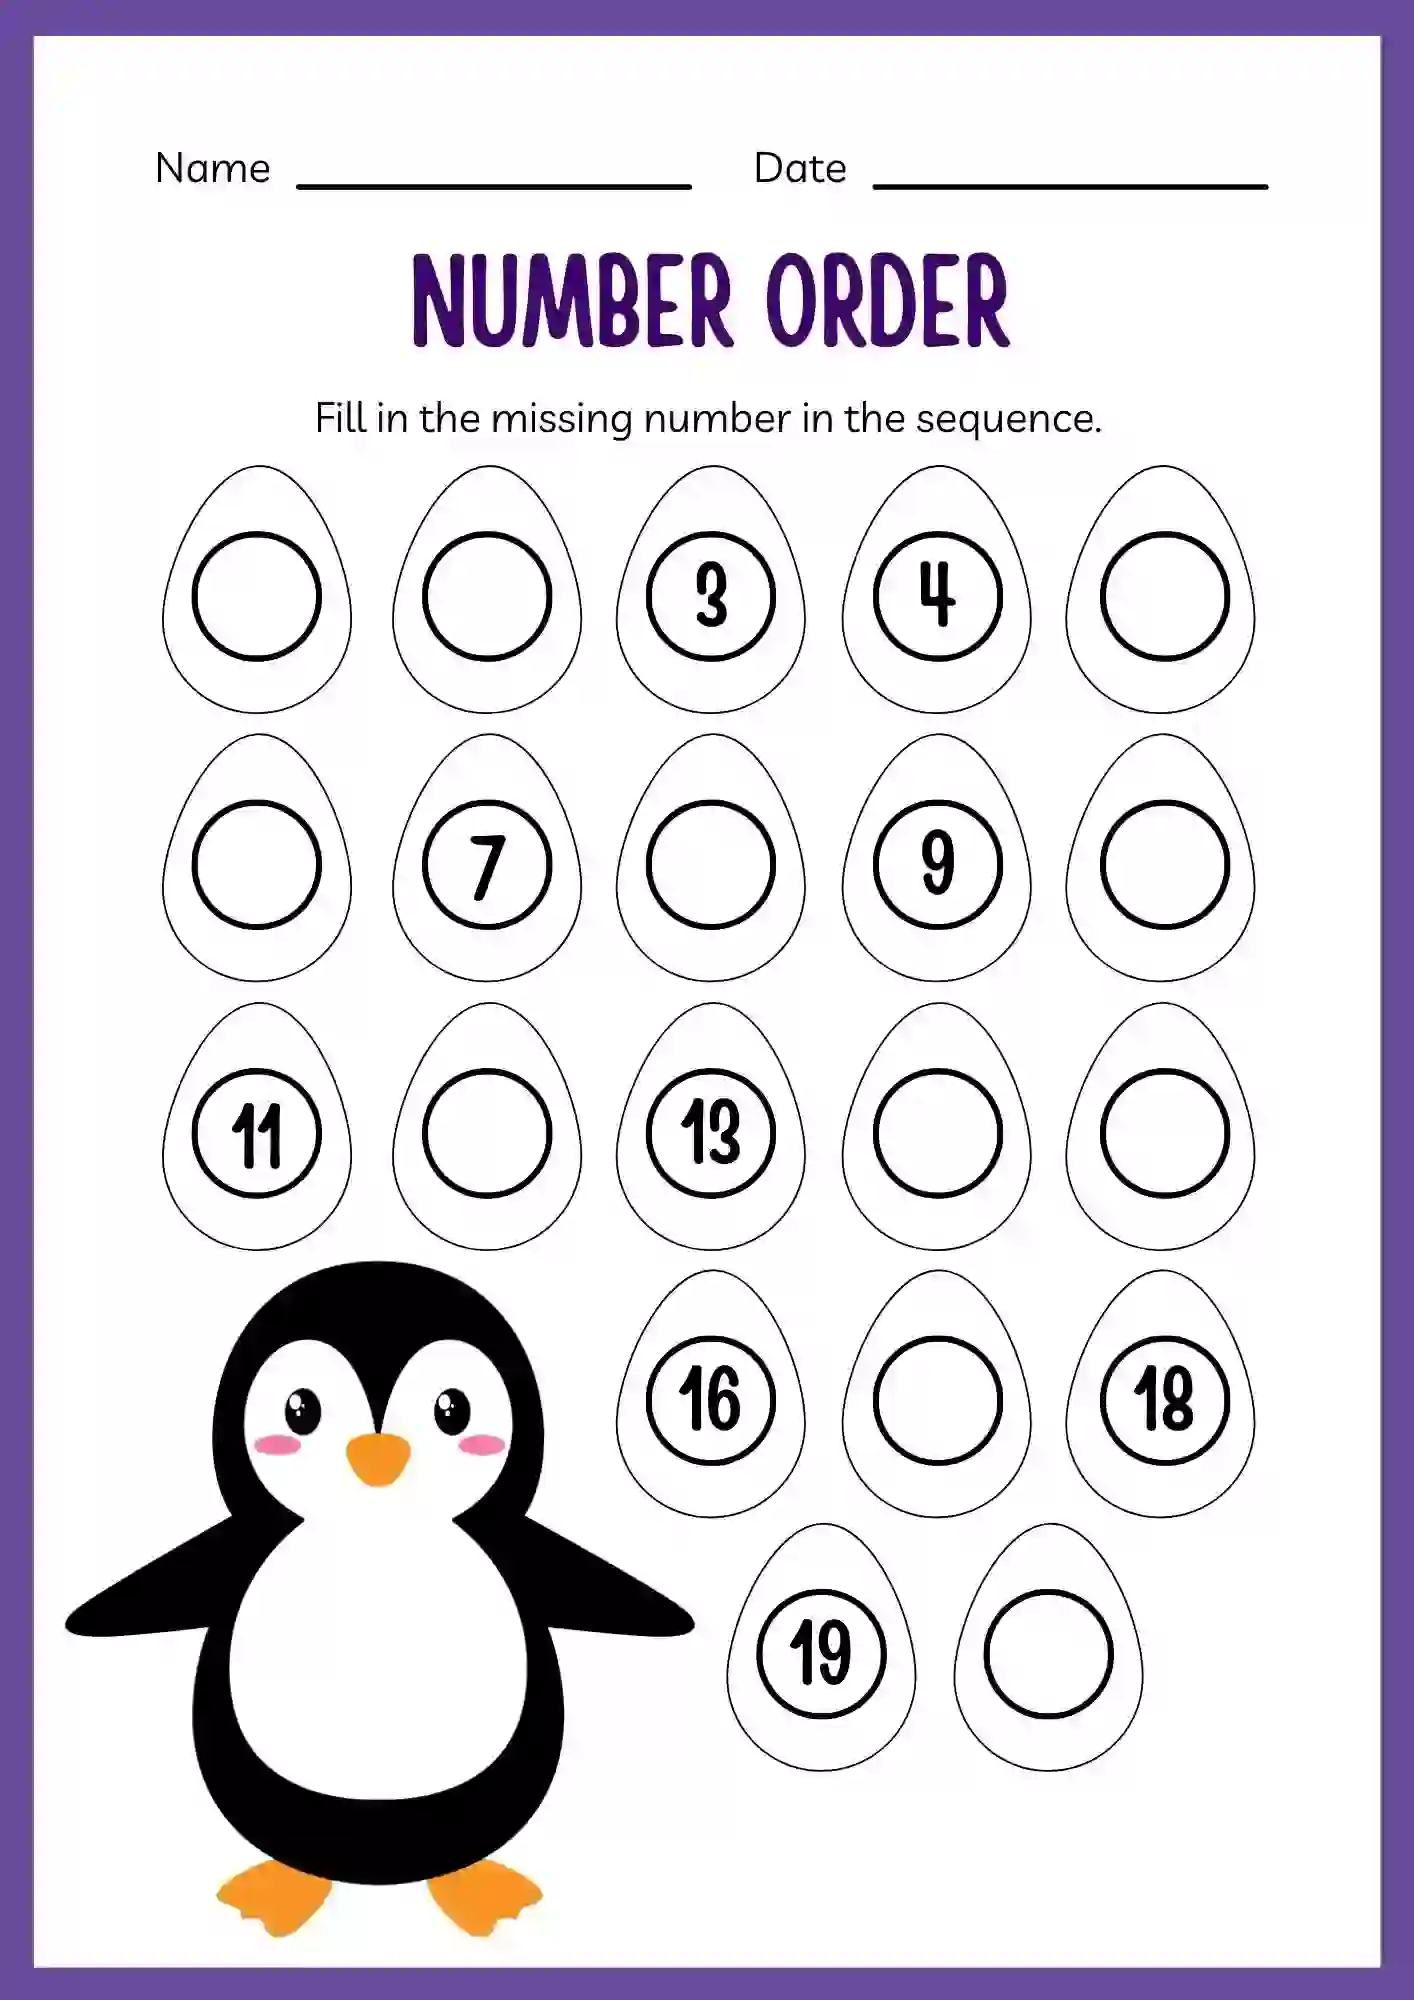 Numbers Ordering Worksheets For kindergarten (lkg) 1 to 20